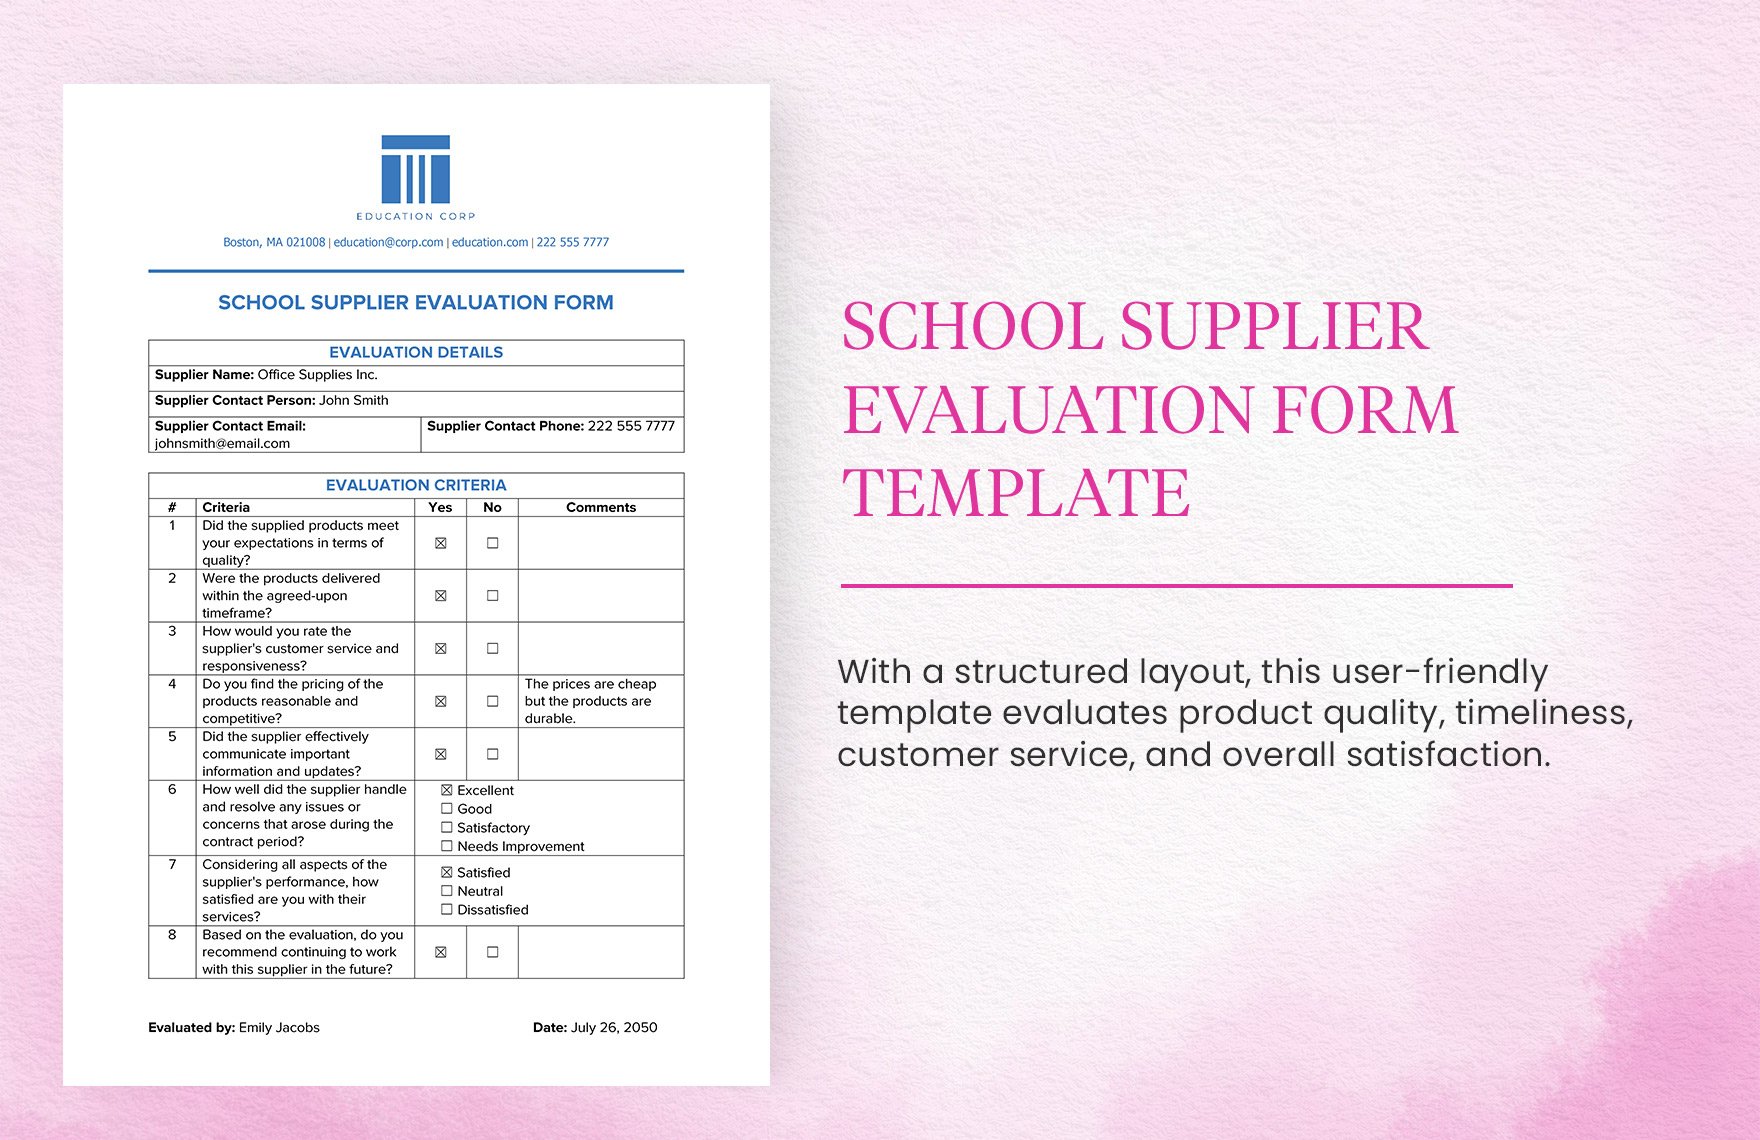 School Supplier Evaluation Form Template